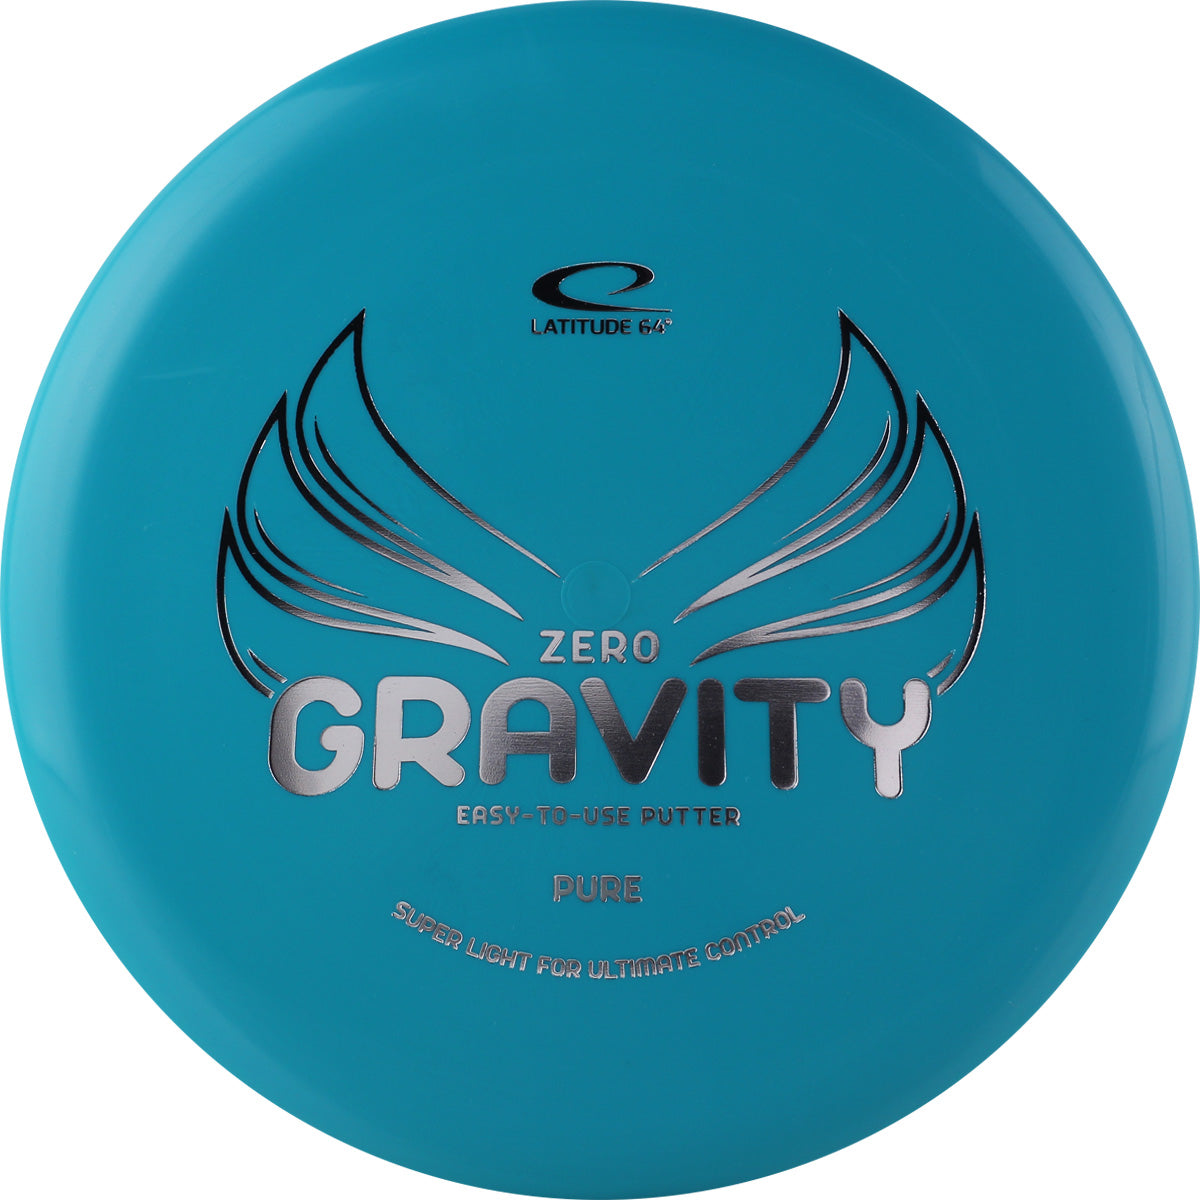 Zero Gravity Pure